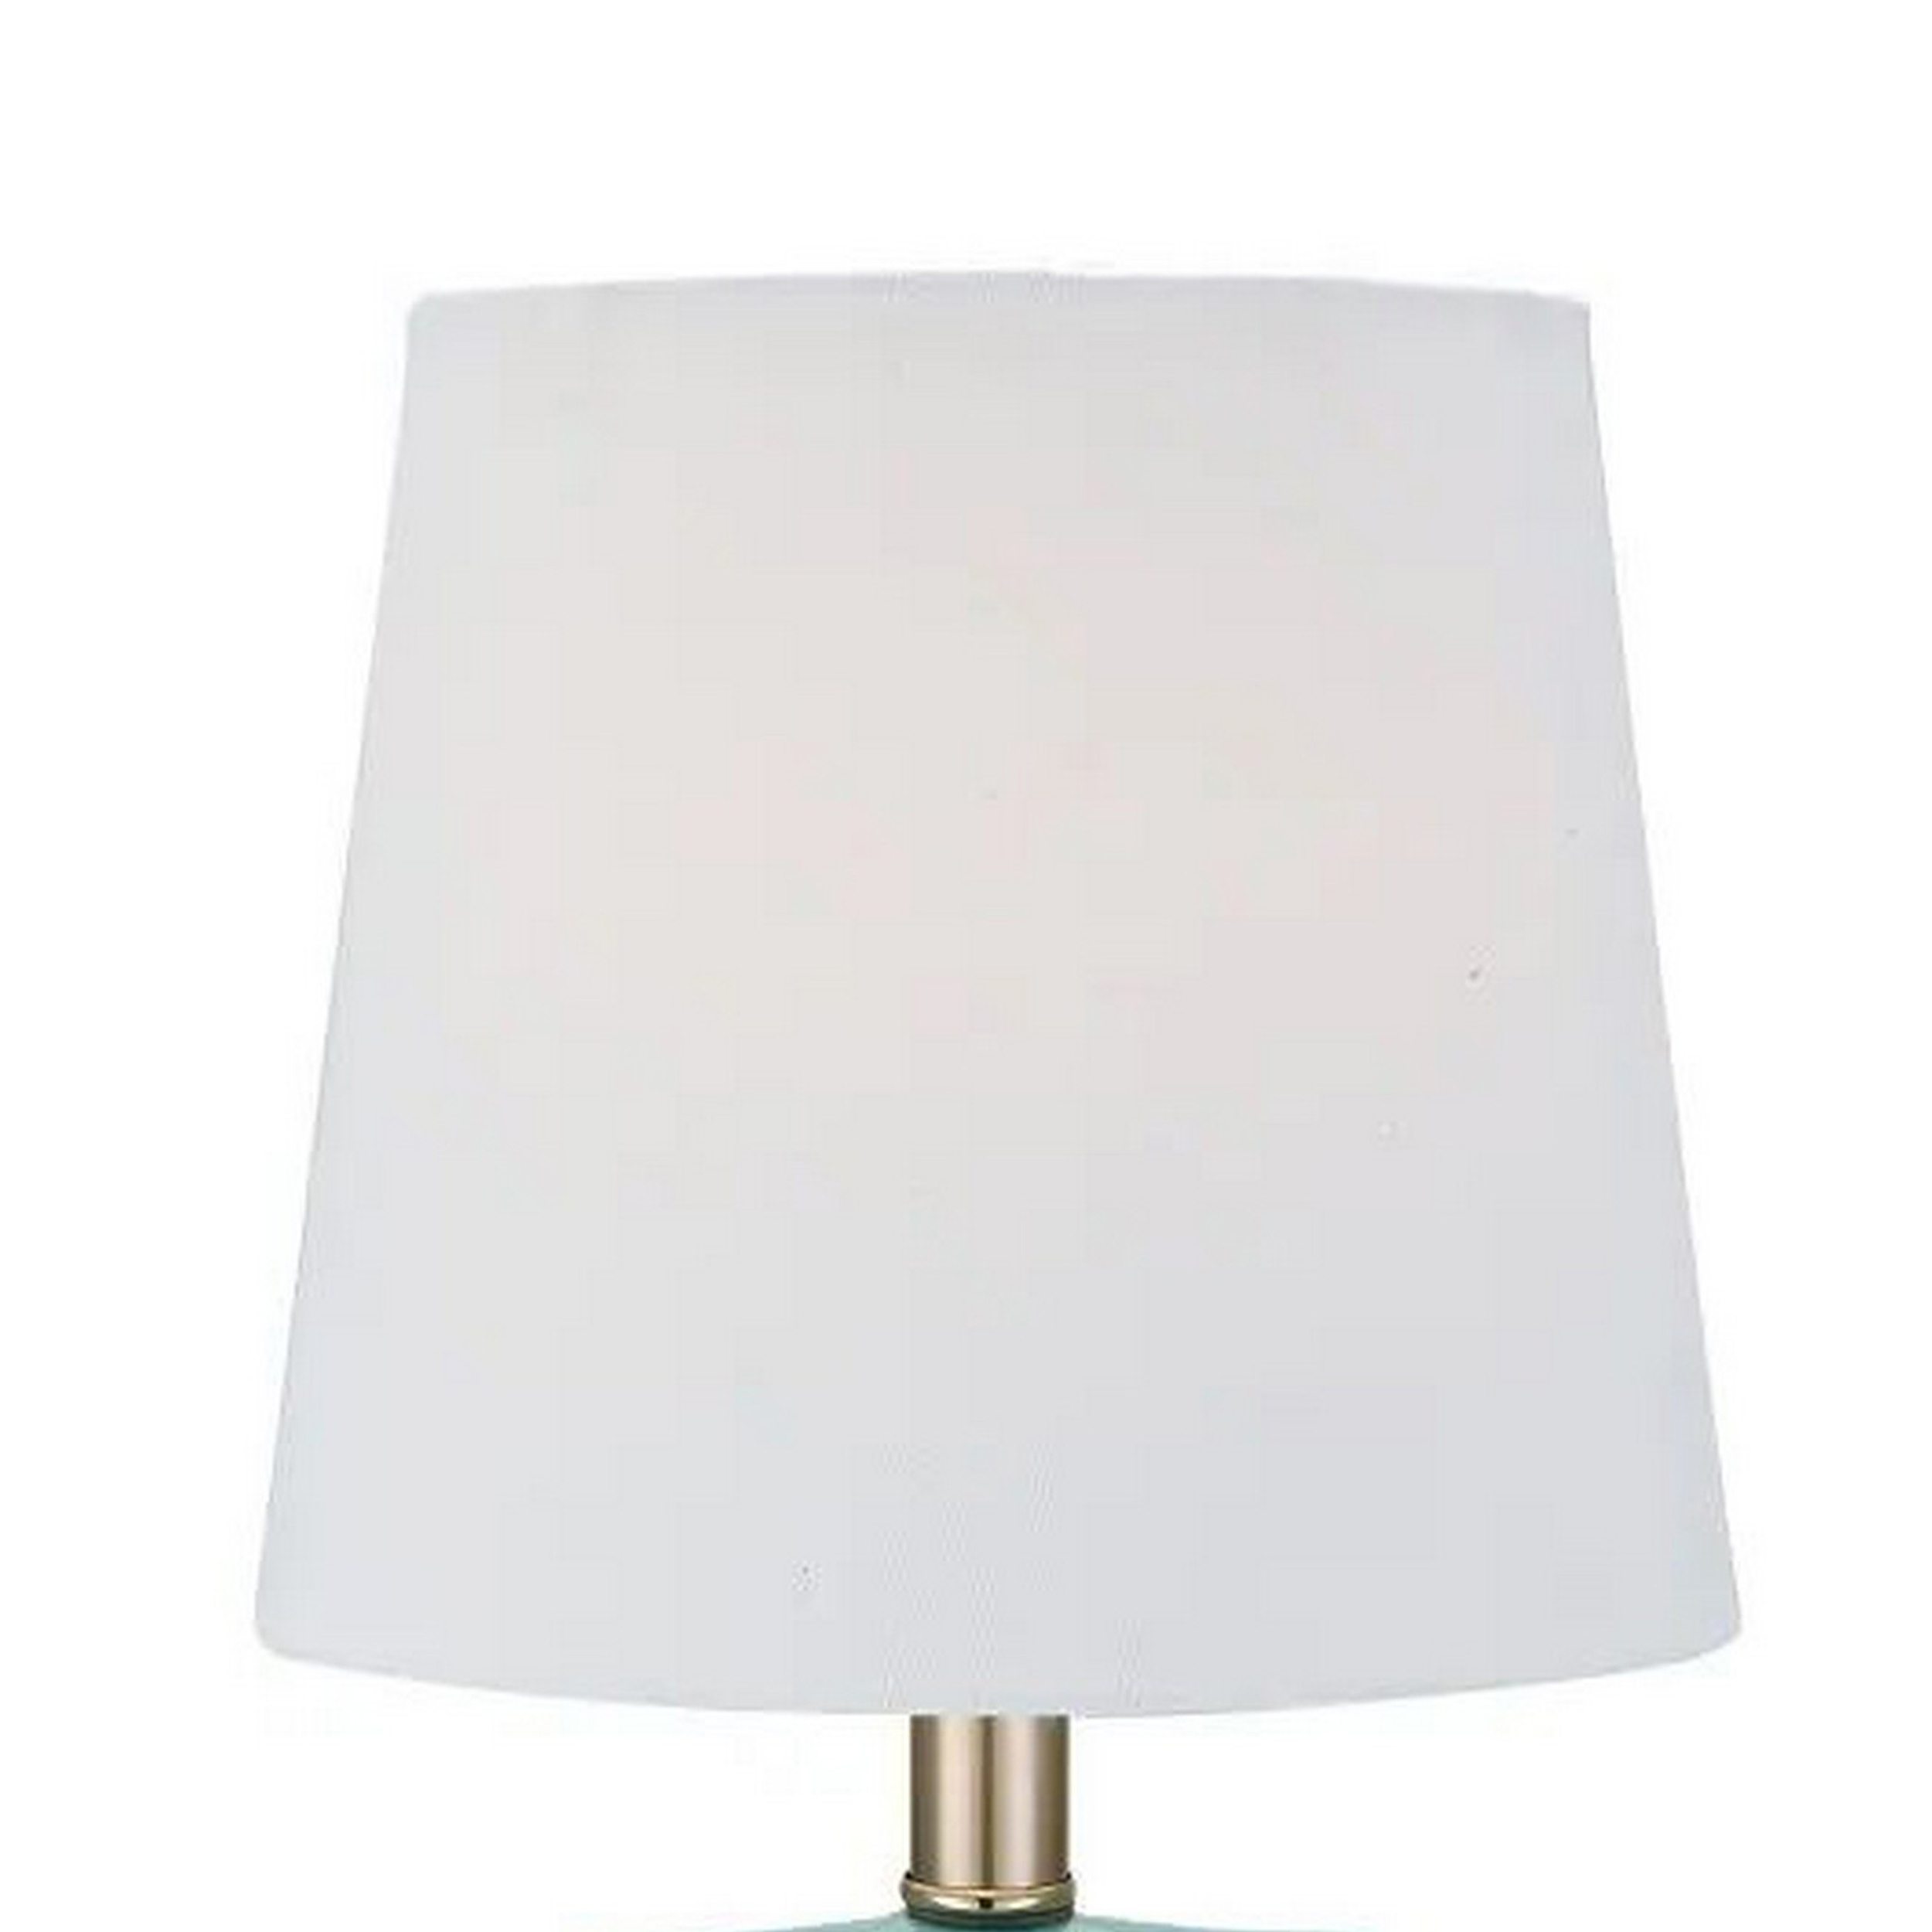 18 Inch Table Lamp With Owl Stand, Set Of 2, Ceramic, Aqua Haze Finish -Saltoro Sherpi